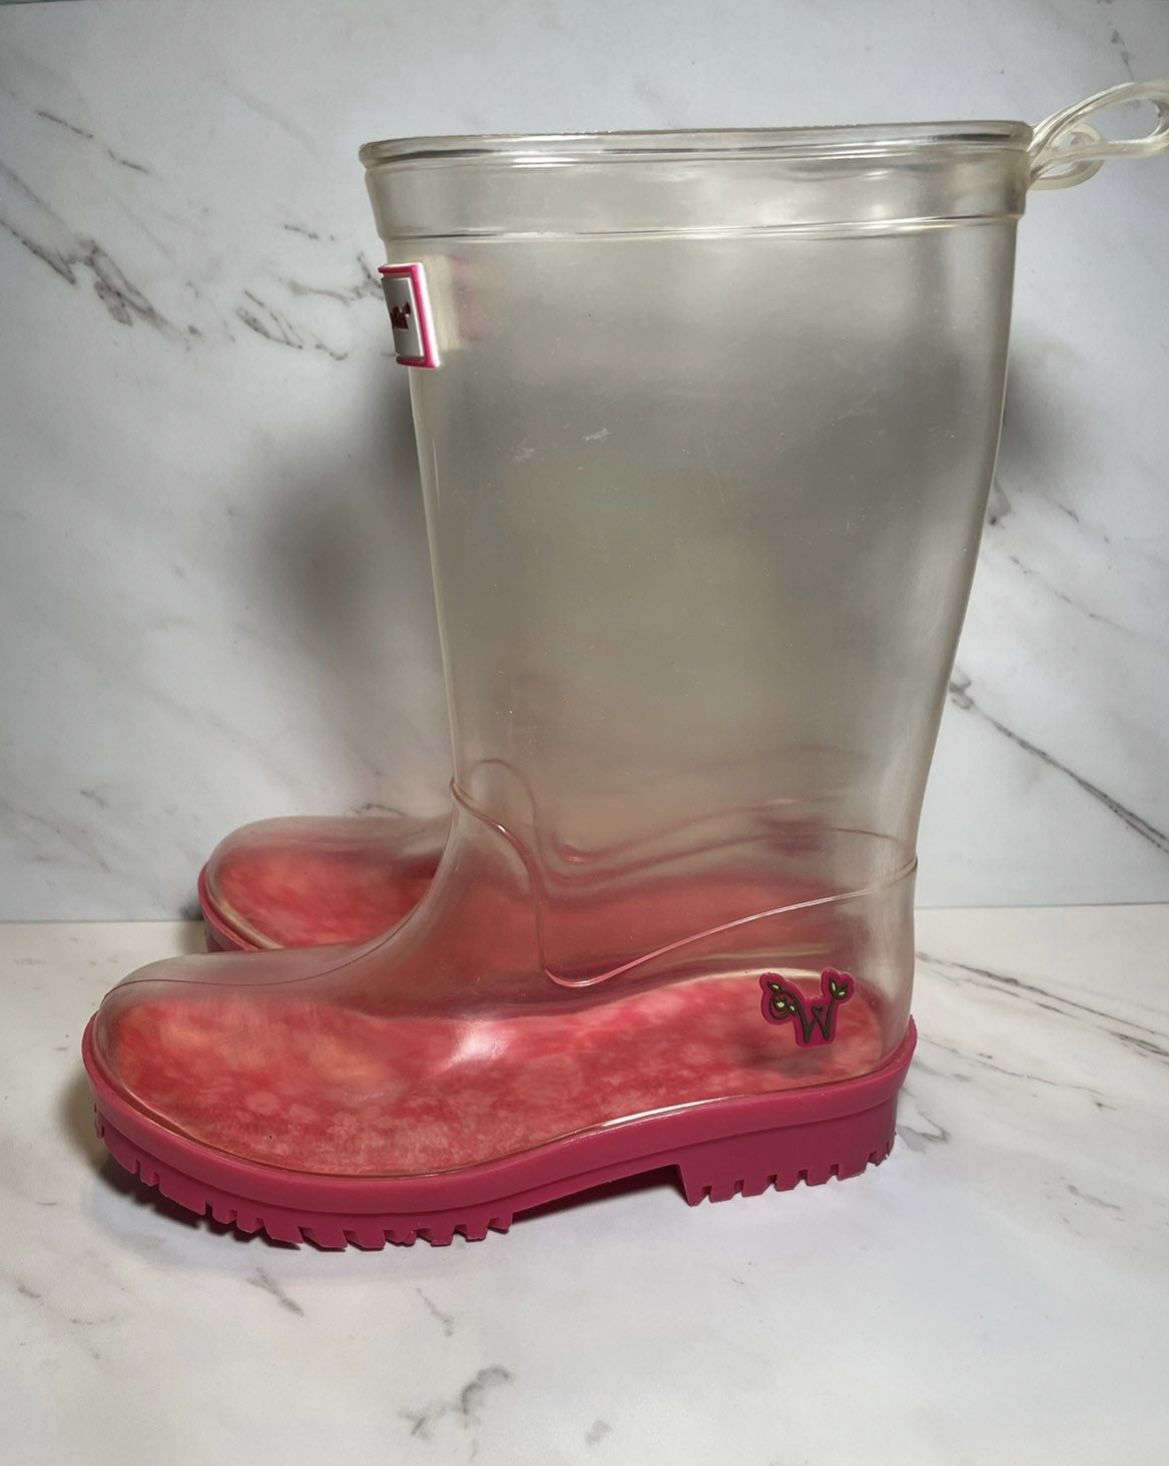 American Girl ~Wellie Wishers Peek A Boo Wellies Girls Sz 12/13 Clear Rain Boots.  For little Girls!!